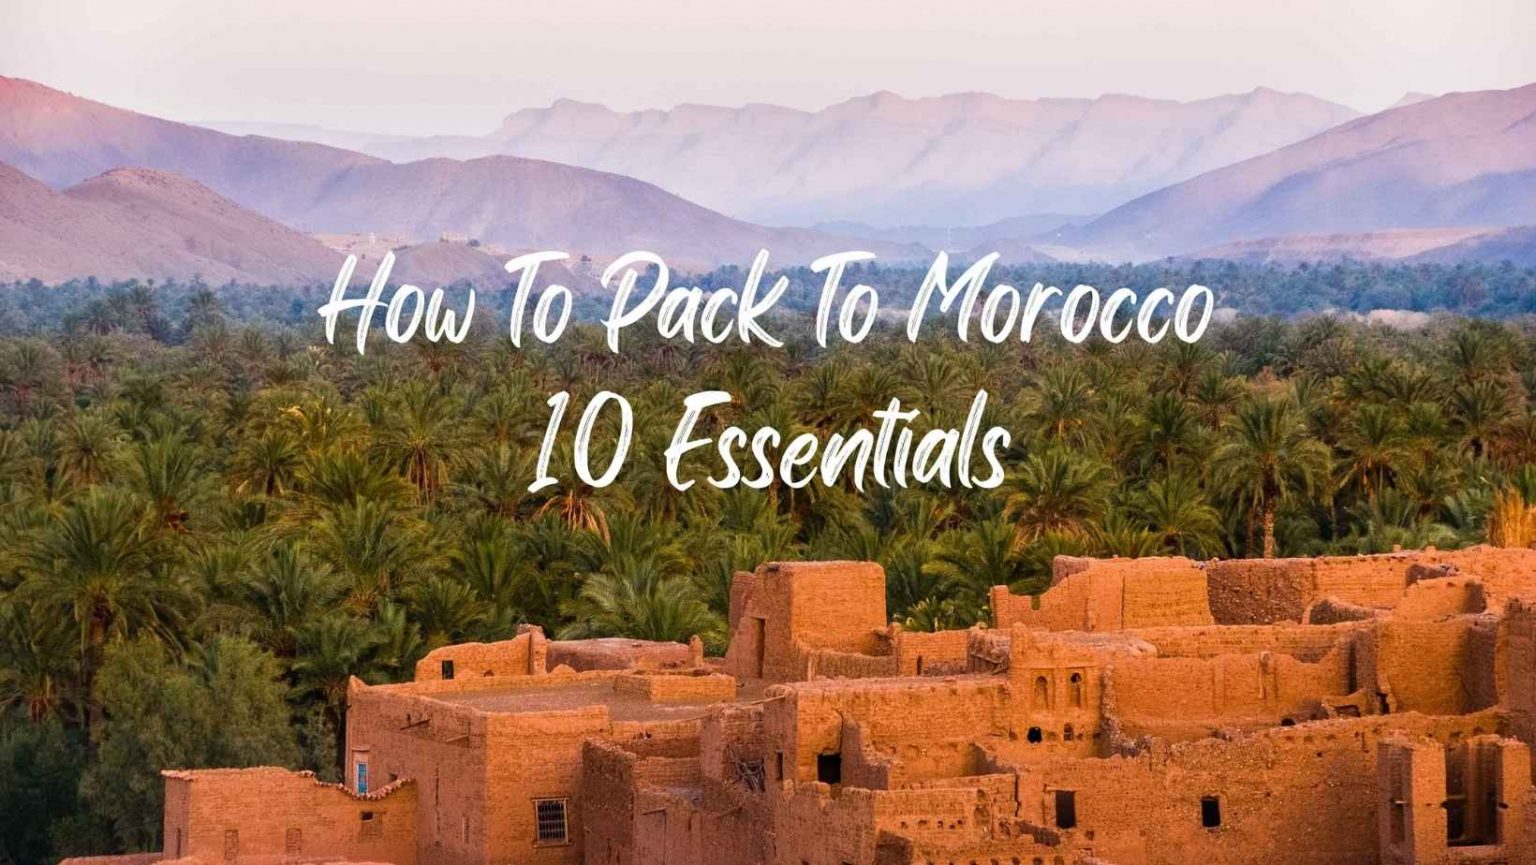 morocco official tourism website